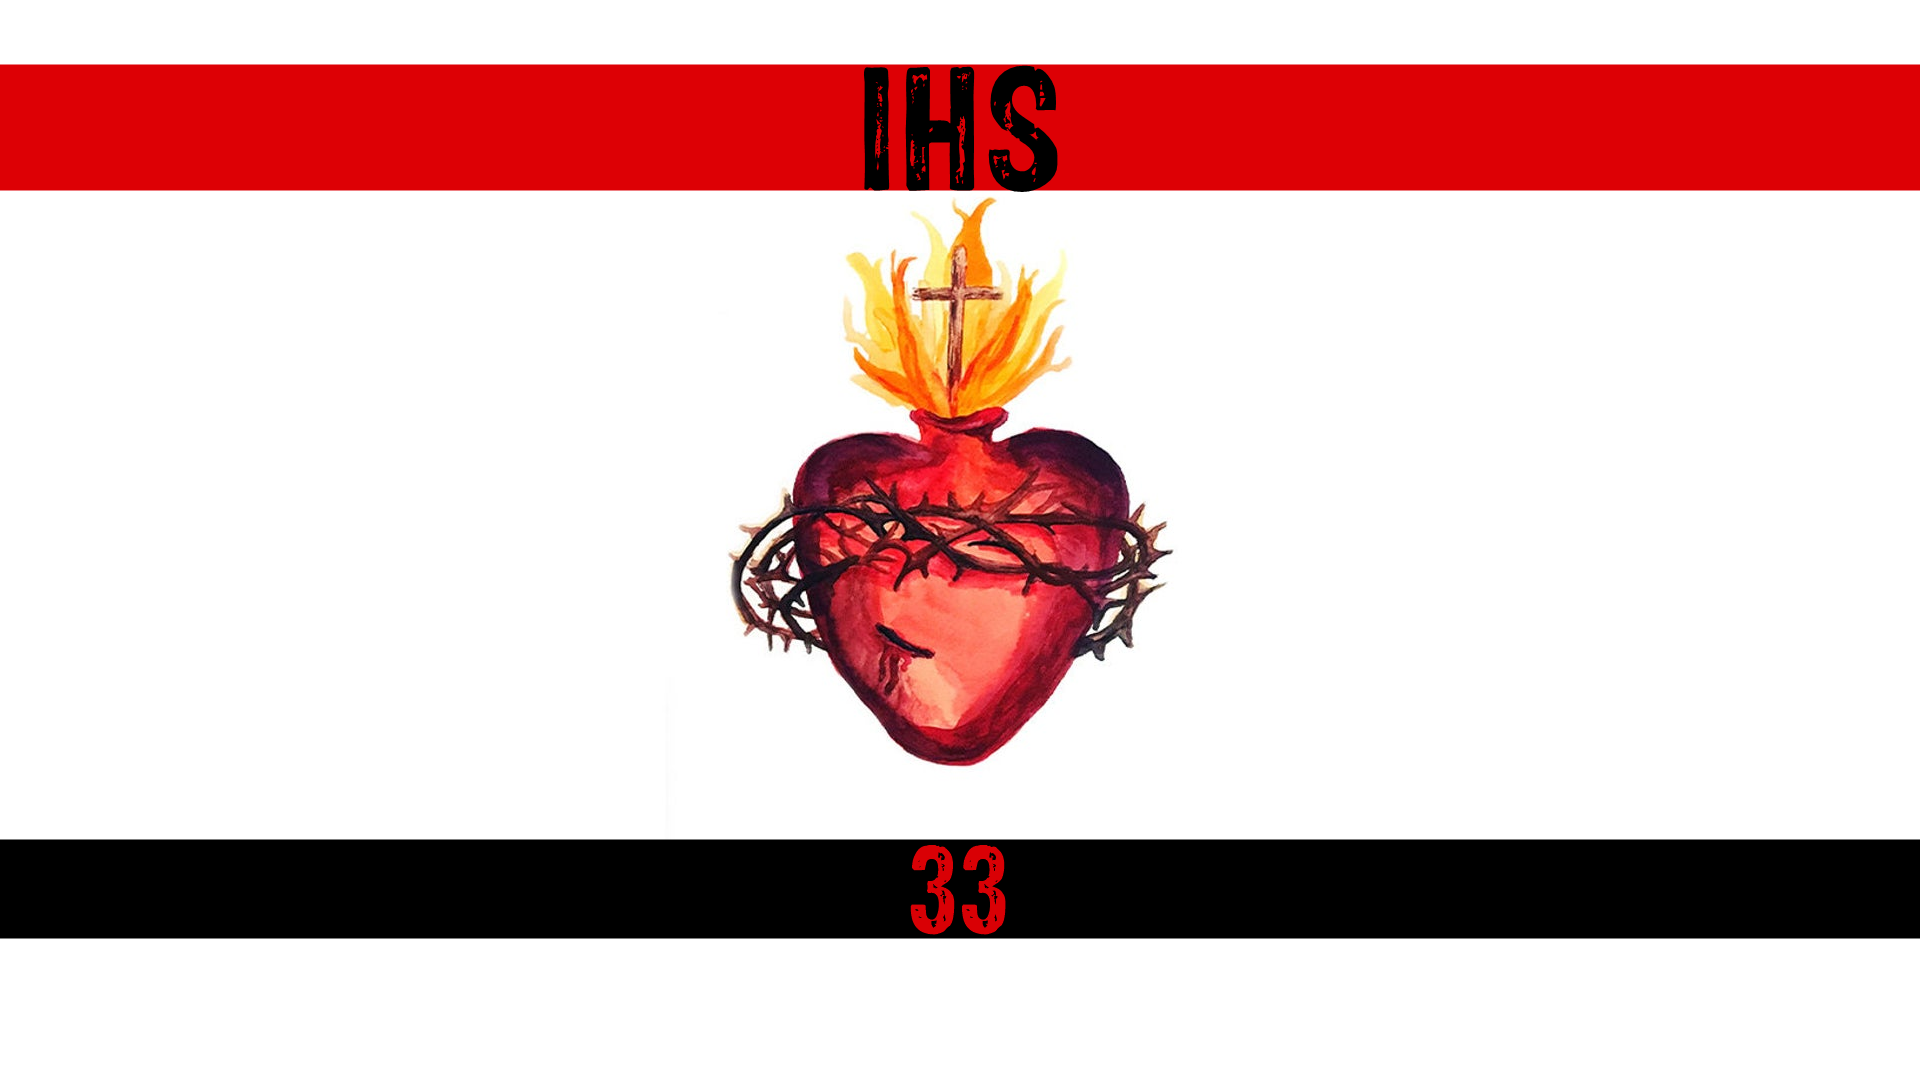 General 1920x1080 IHS Jesus Christ Sacred Heart red white black religion Catholicism